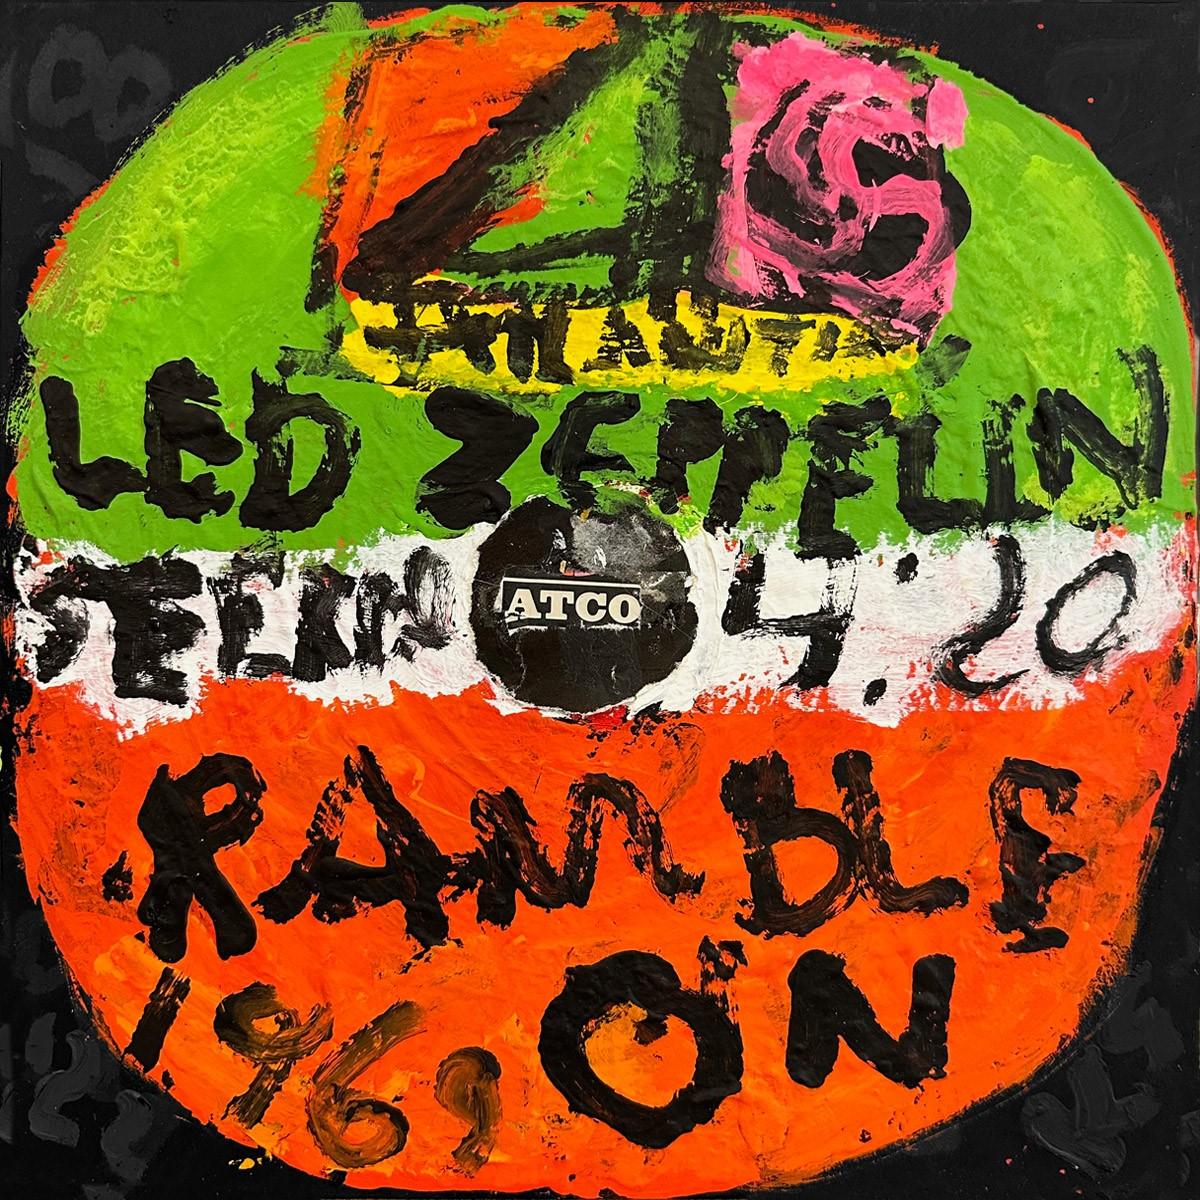 Led Zeppelin – Ramble On (Record Label, Pop Art, Grammy)